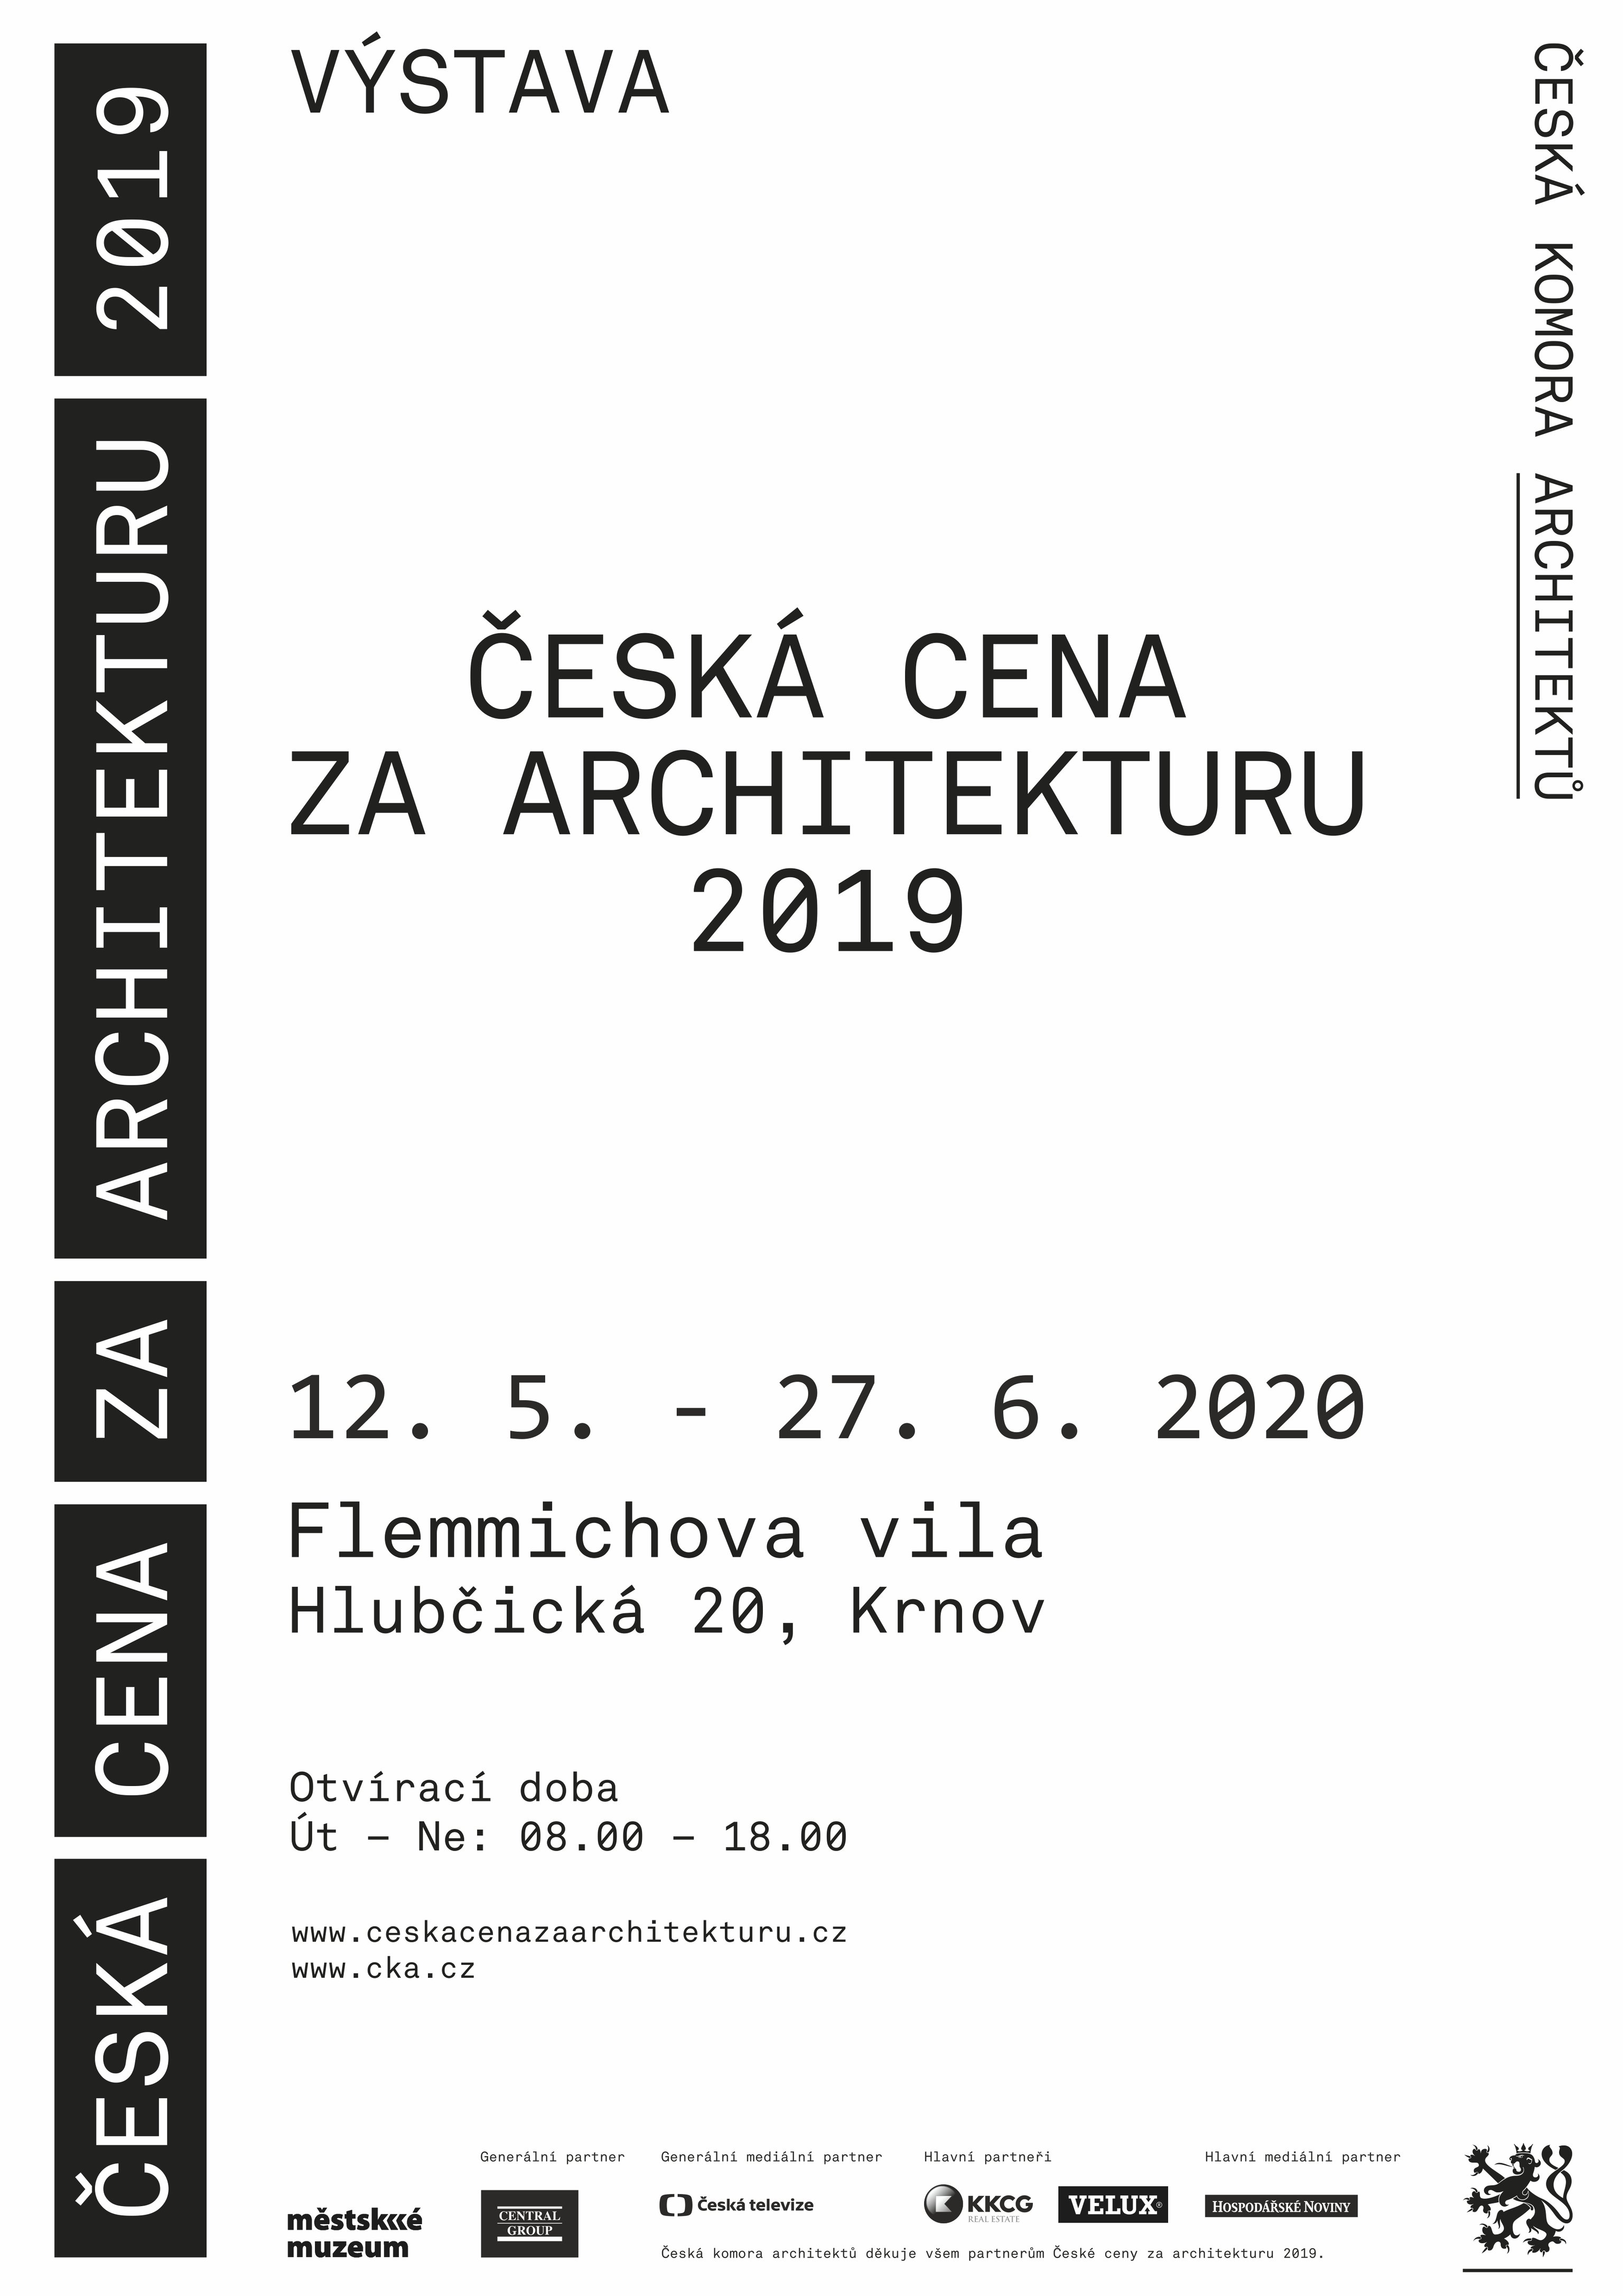 VÝSTAVA ČESKÉ CENY ZA ARCHITEKTURU 2019 - KRNOV